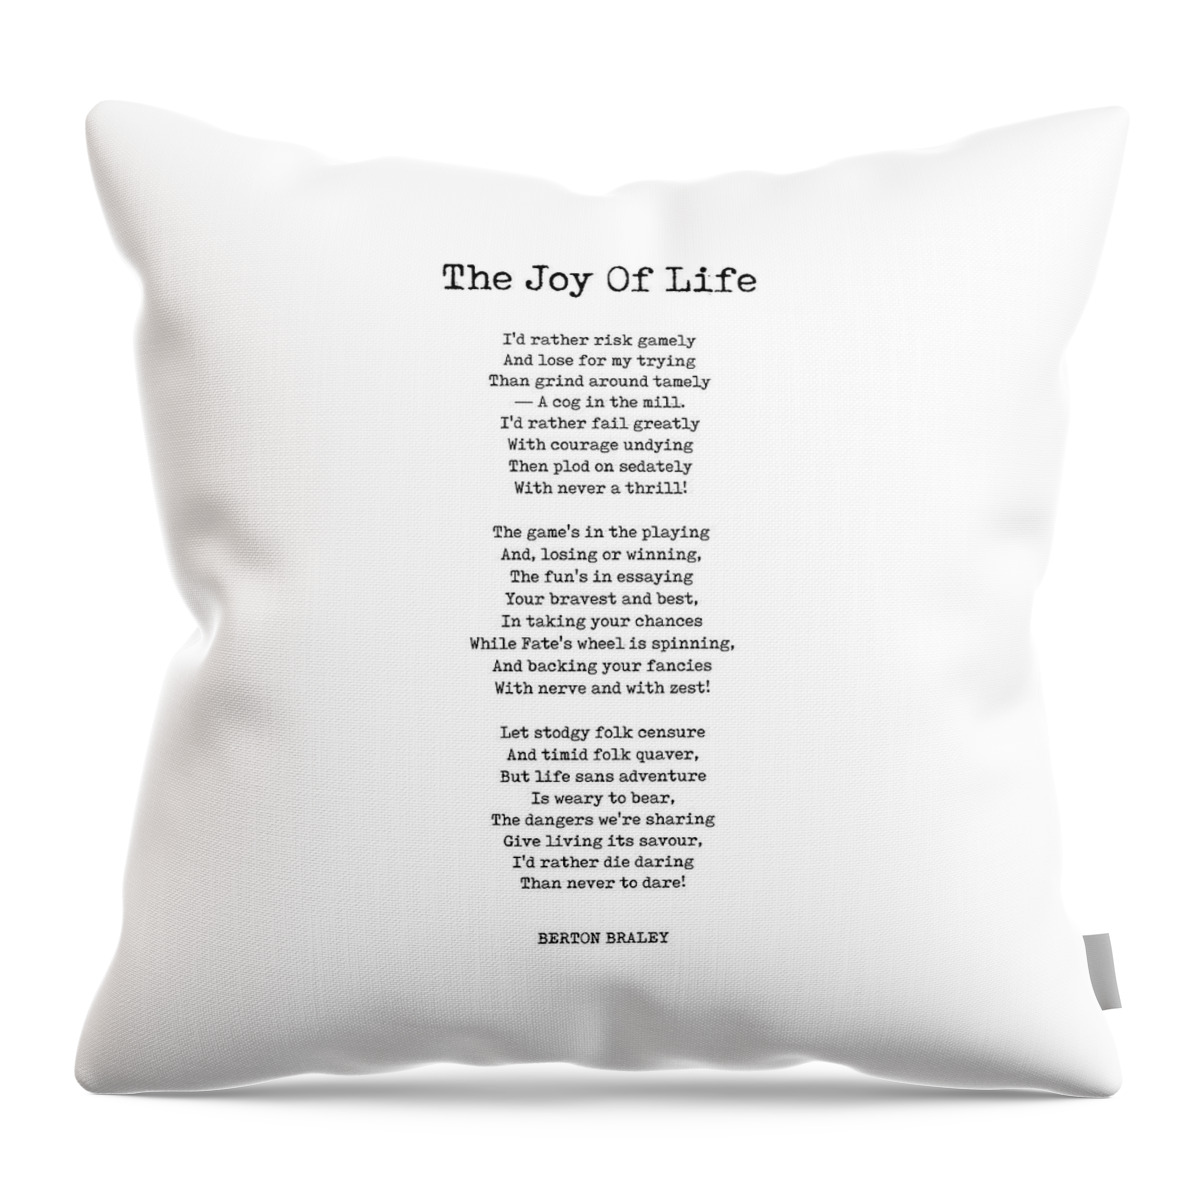 The Joy Of Life Throw Pillow featuring the digital art The Joy Of Life - Berton Braley Poem - Literature - Typewriter Print by Studio Grafiikka